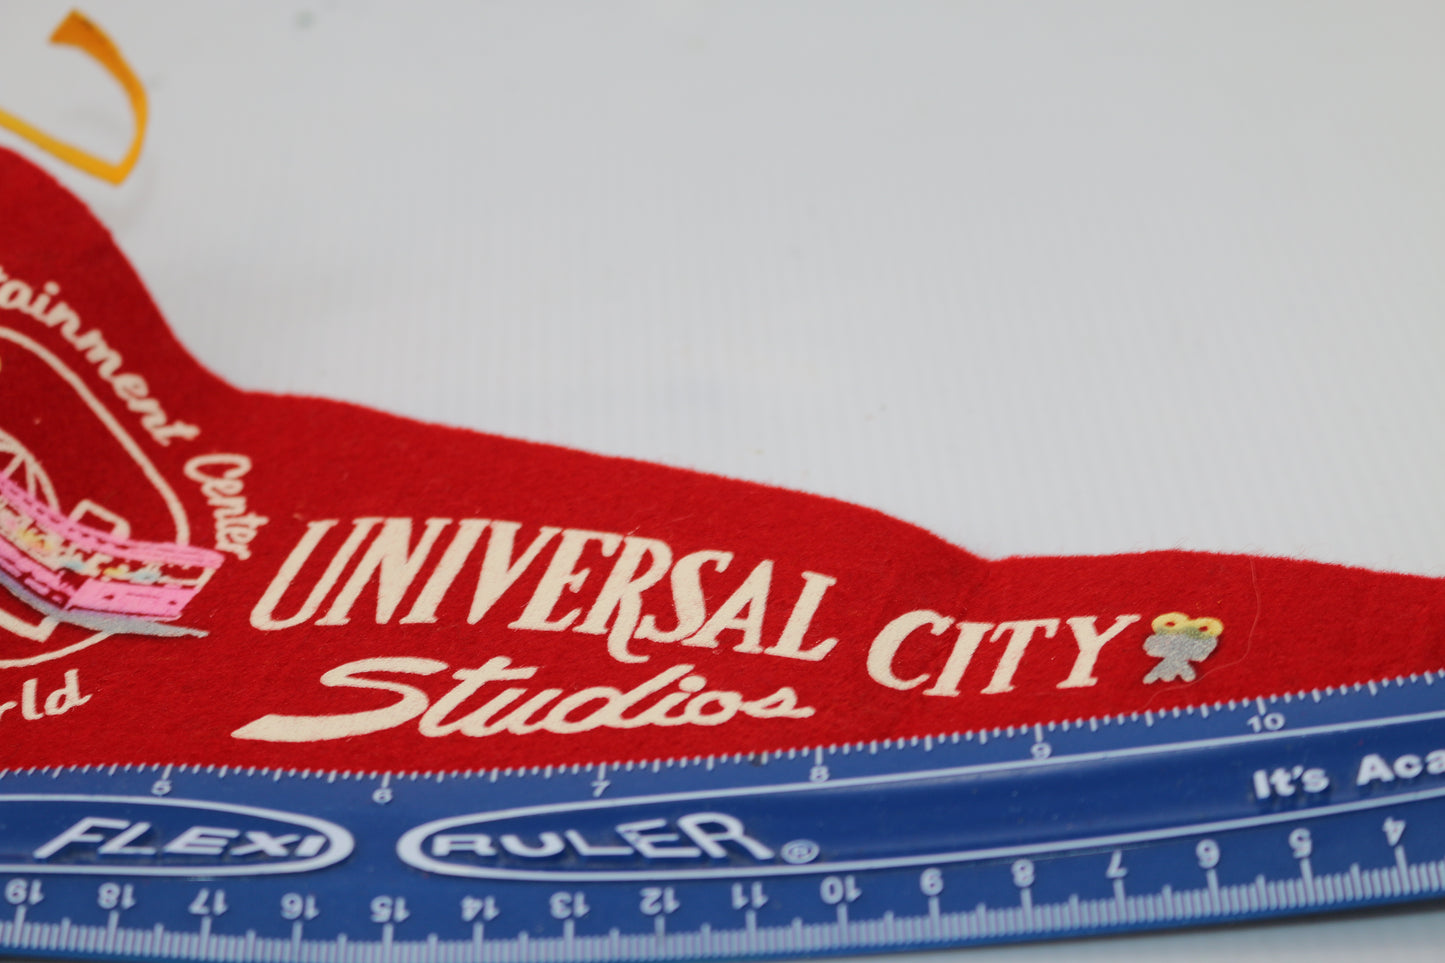 Vintage pennant felt Souvenir USA Universal city Studios red Entertainment